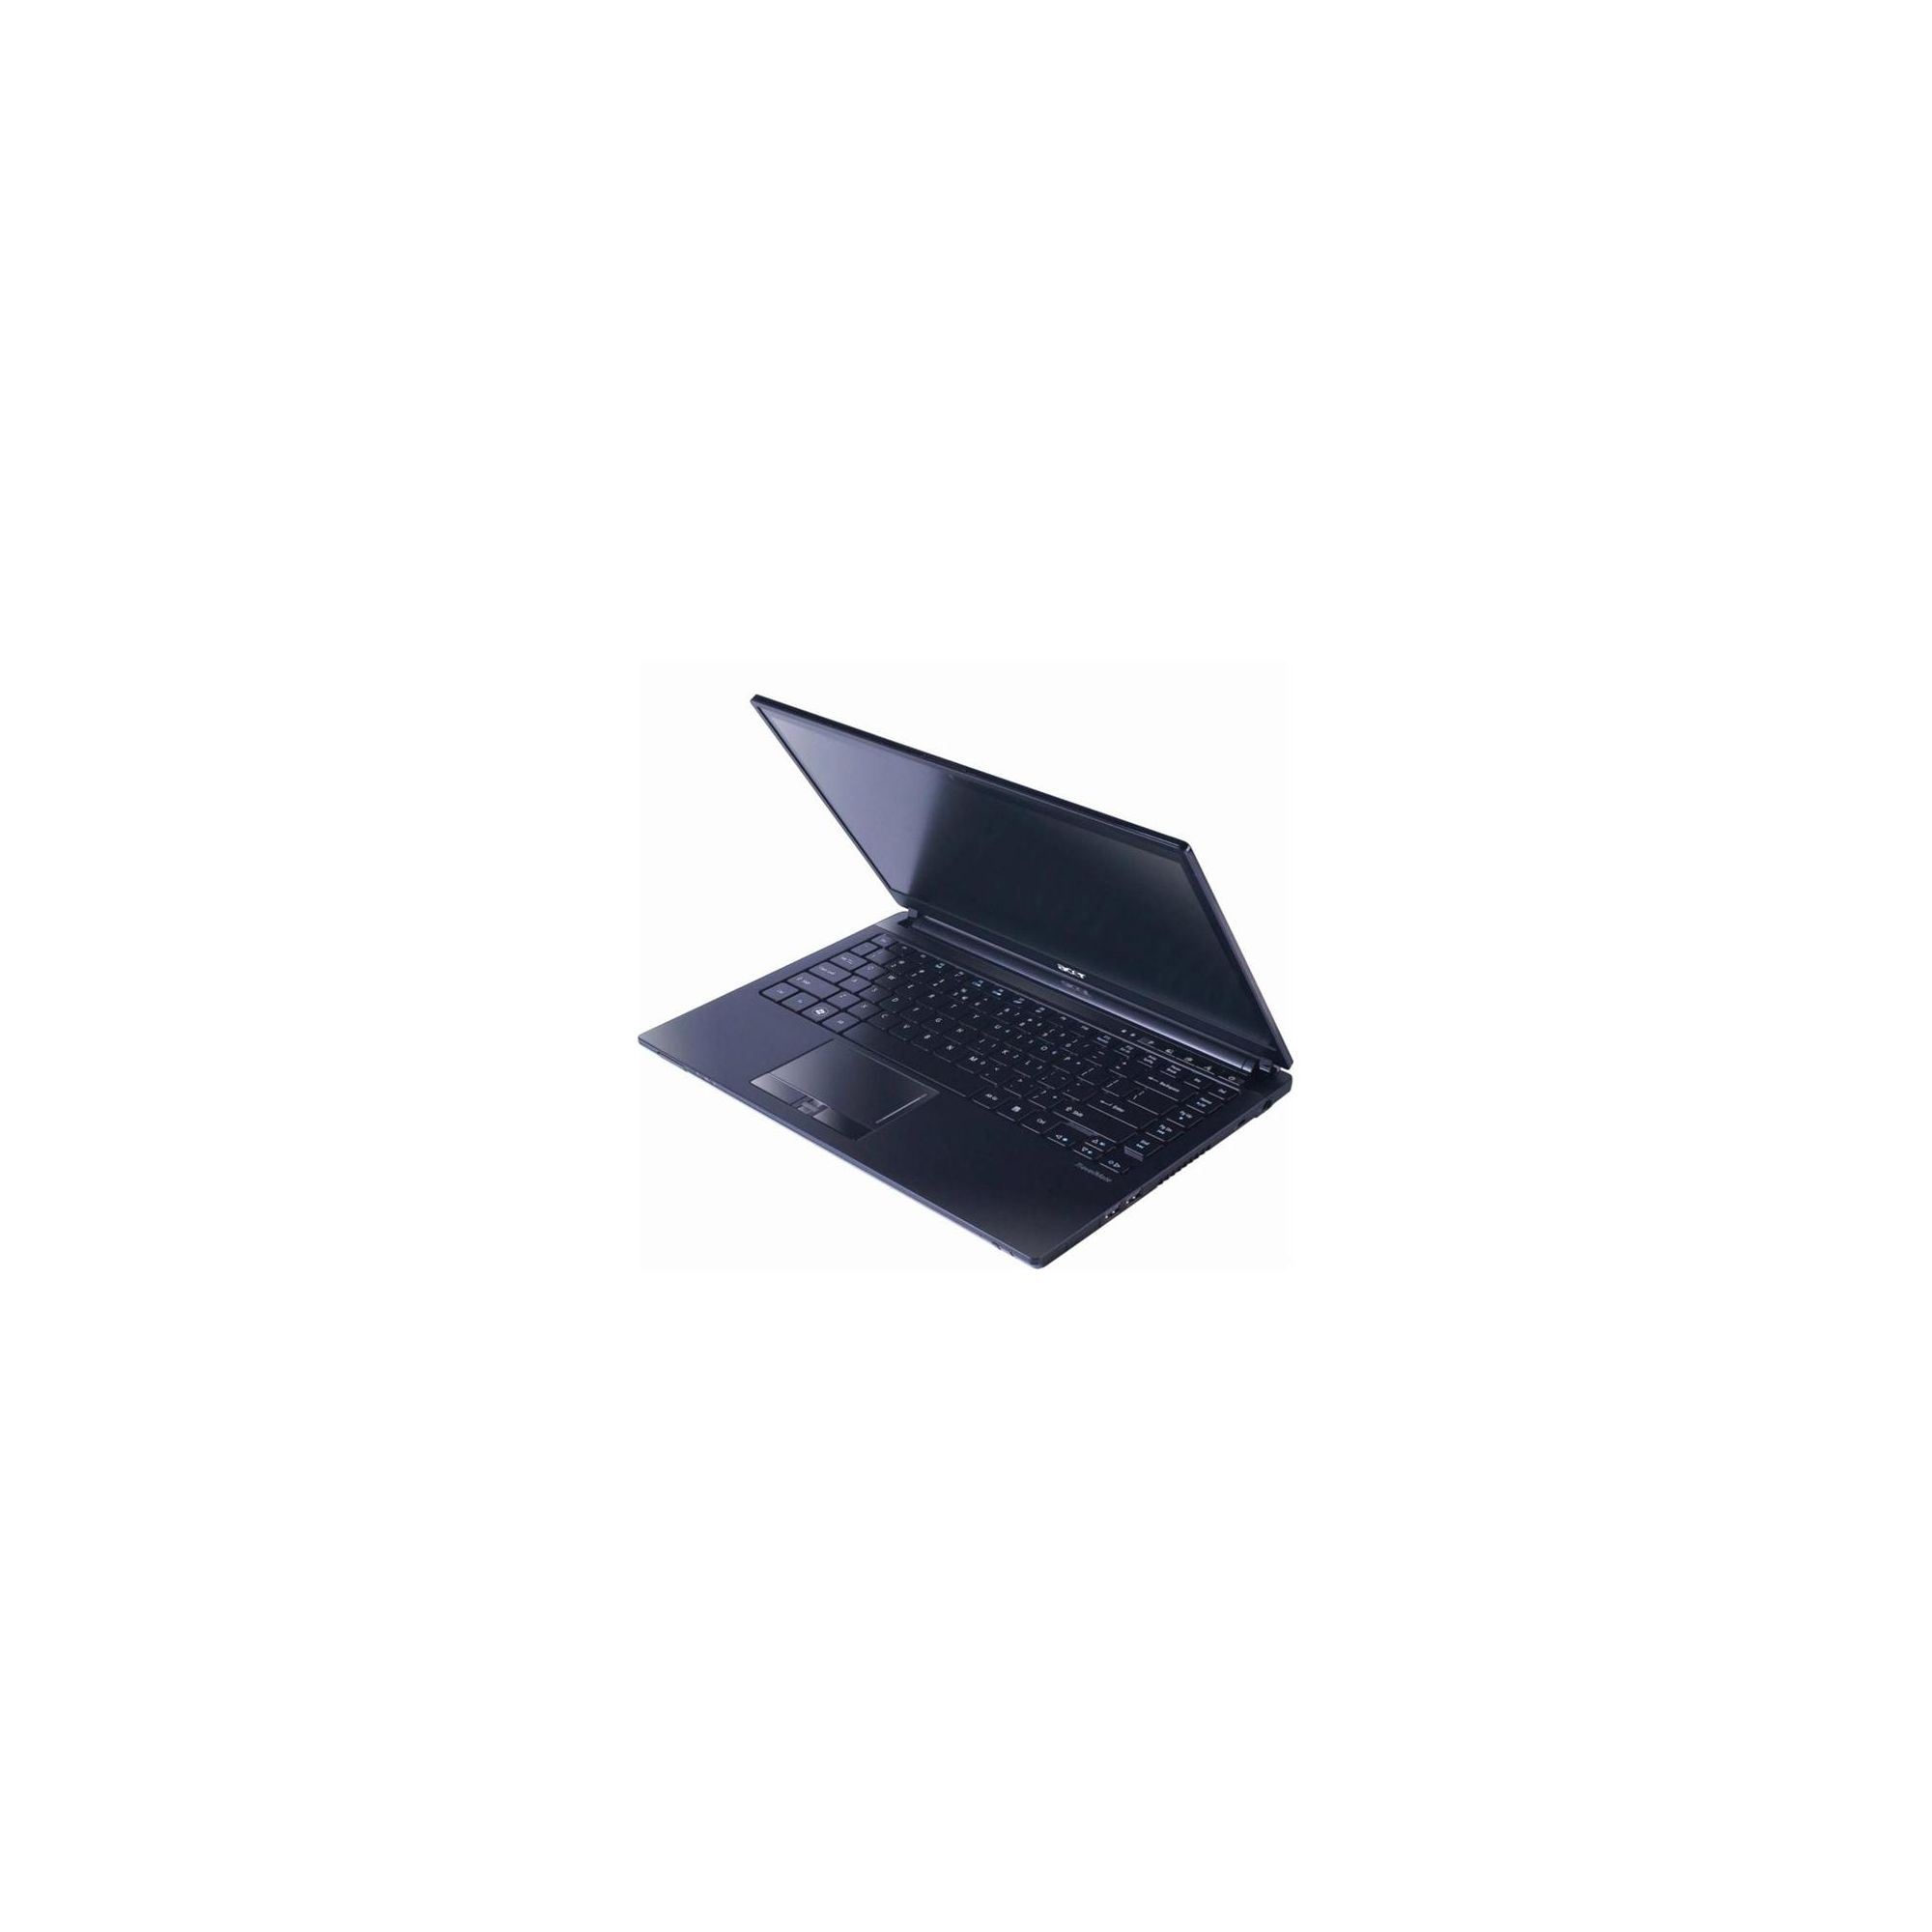 Acer TM 8481T 14-inch Laptop – Black